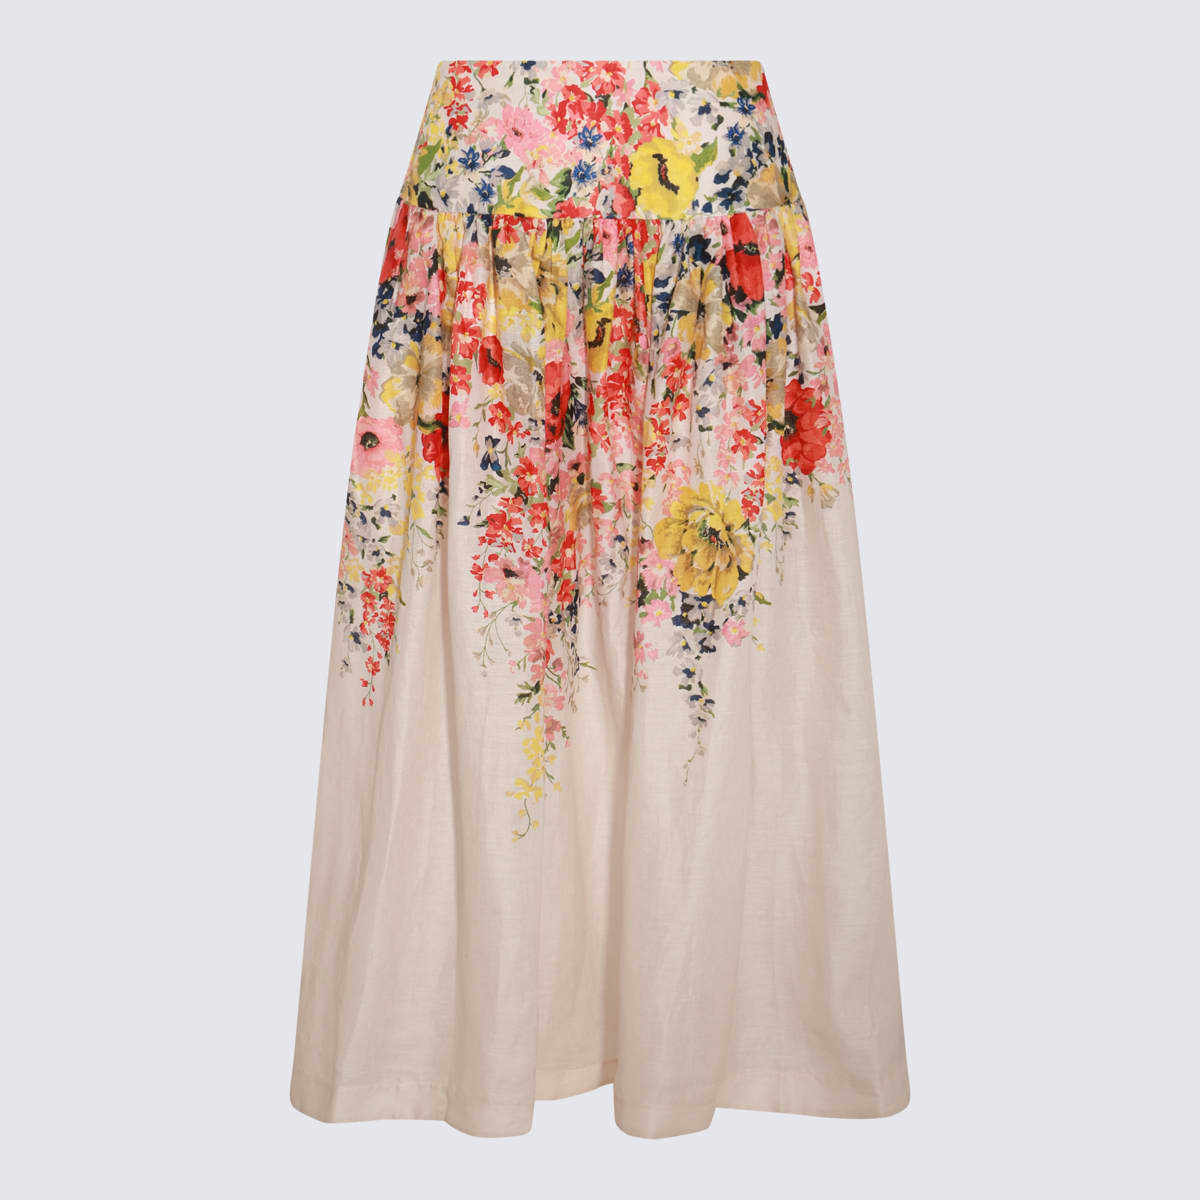 Ivory Midi Skirt